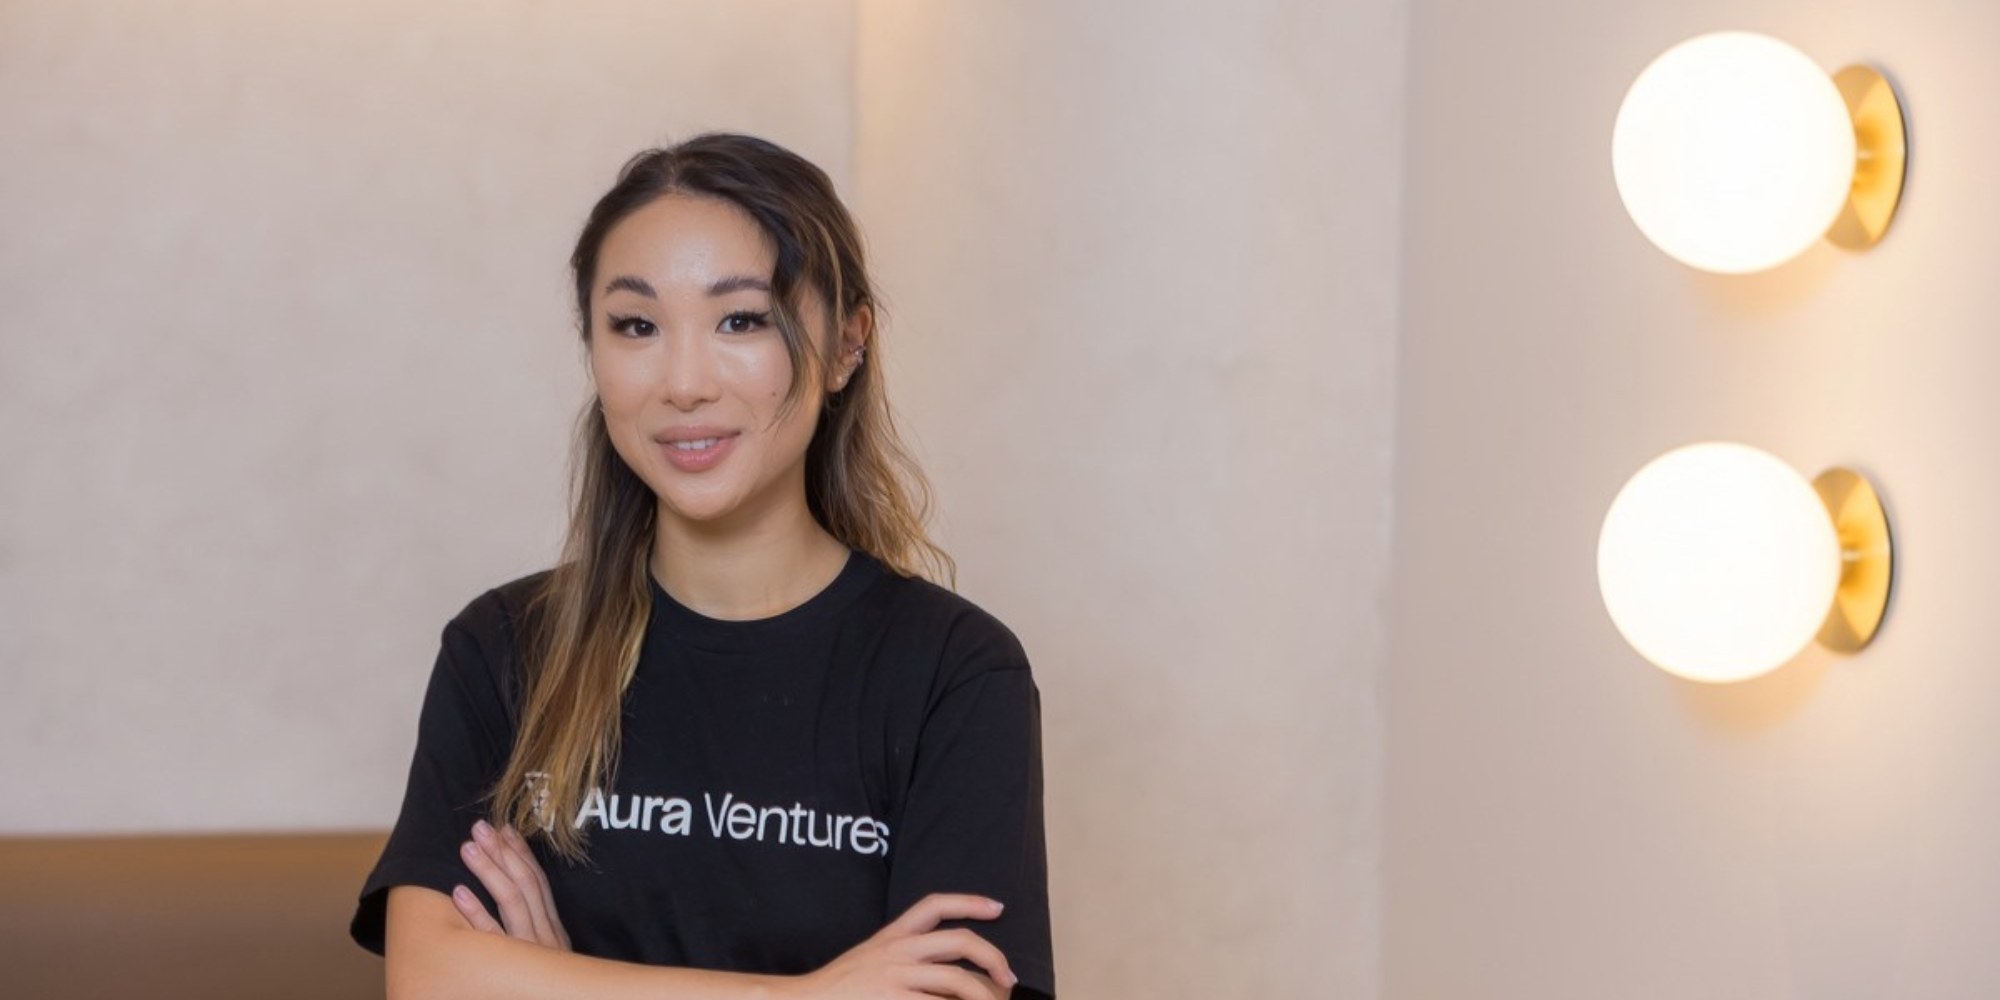 Welcome to the Aura Ventures Team Sabrina Zeng